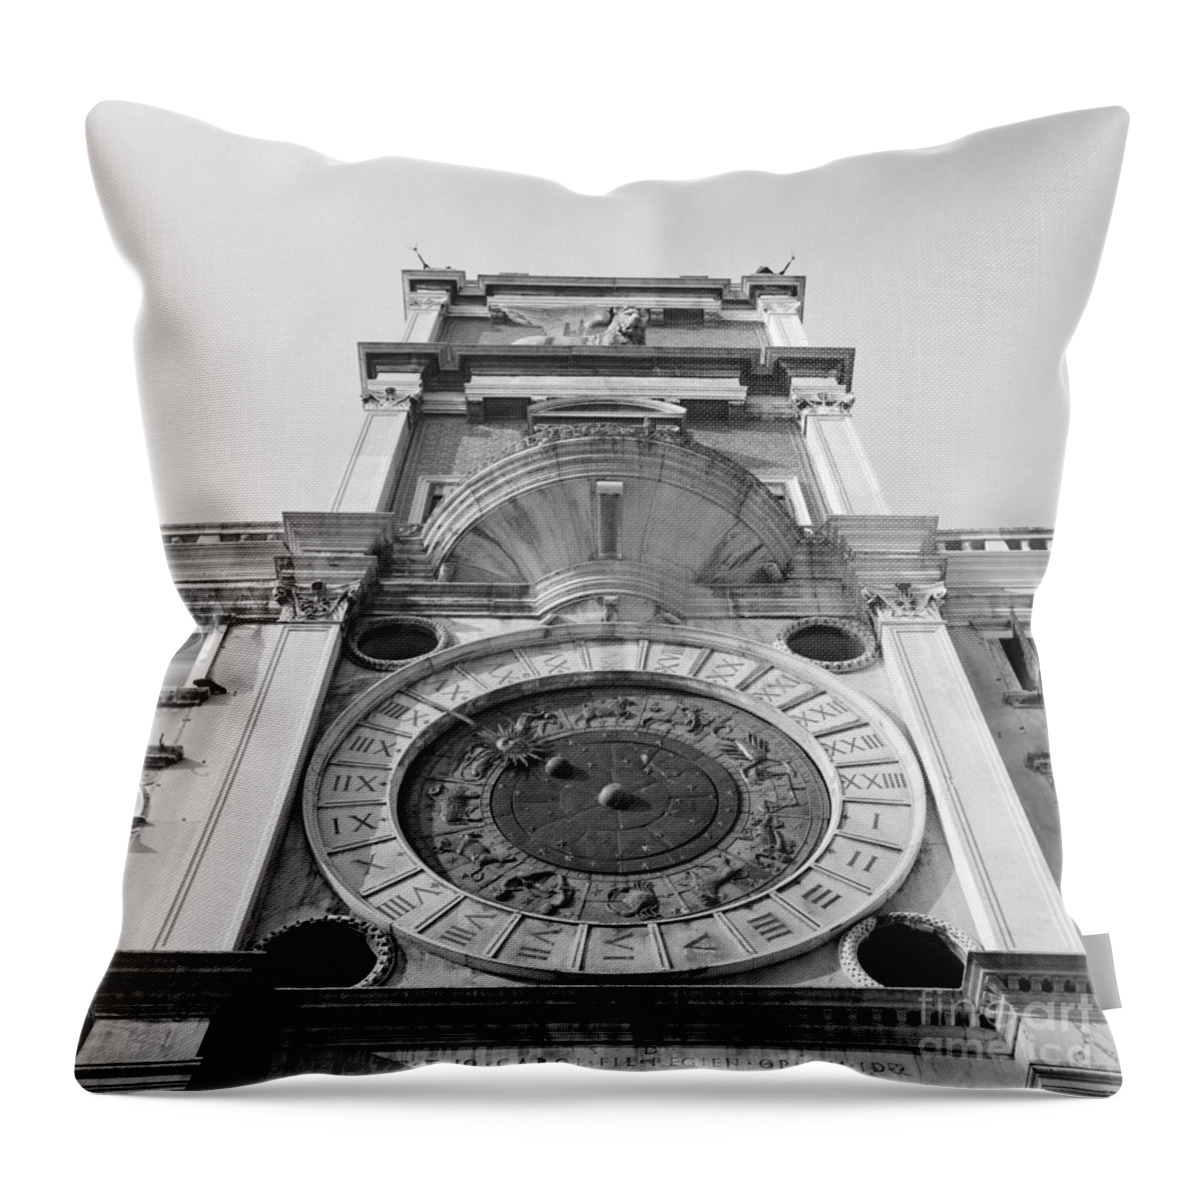 Venice Throw Pillow featuring the photograph Venice Clock Tower by Riccardo Mottola